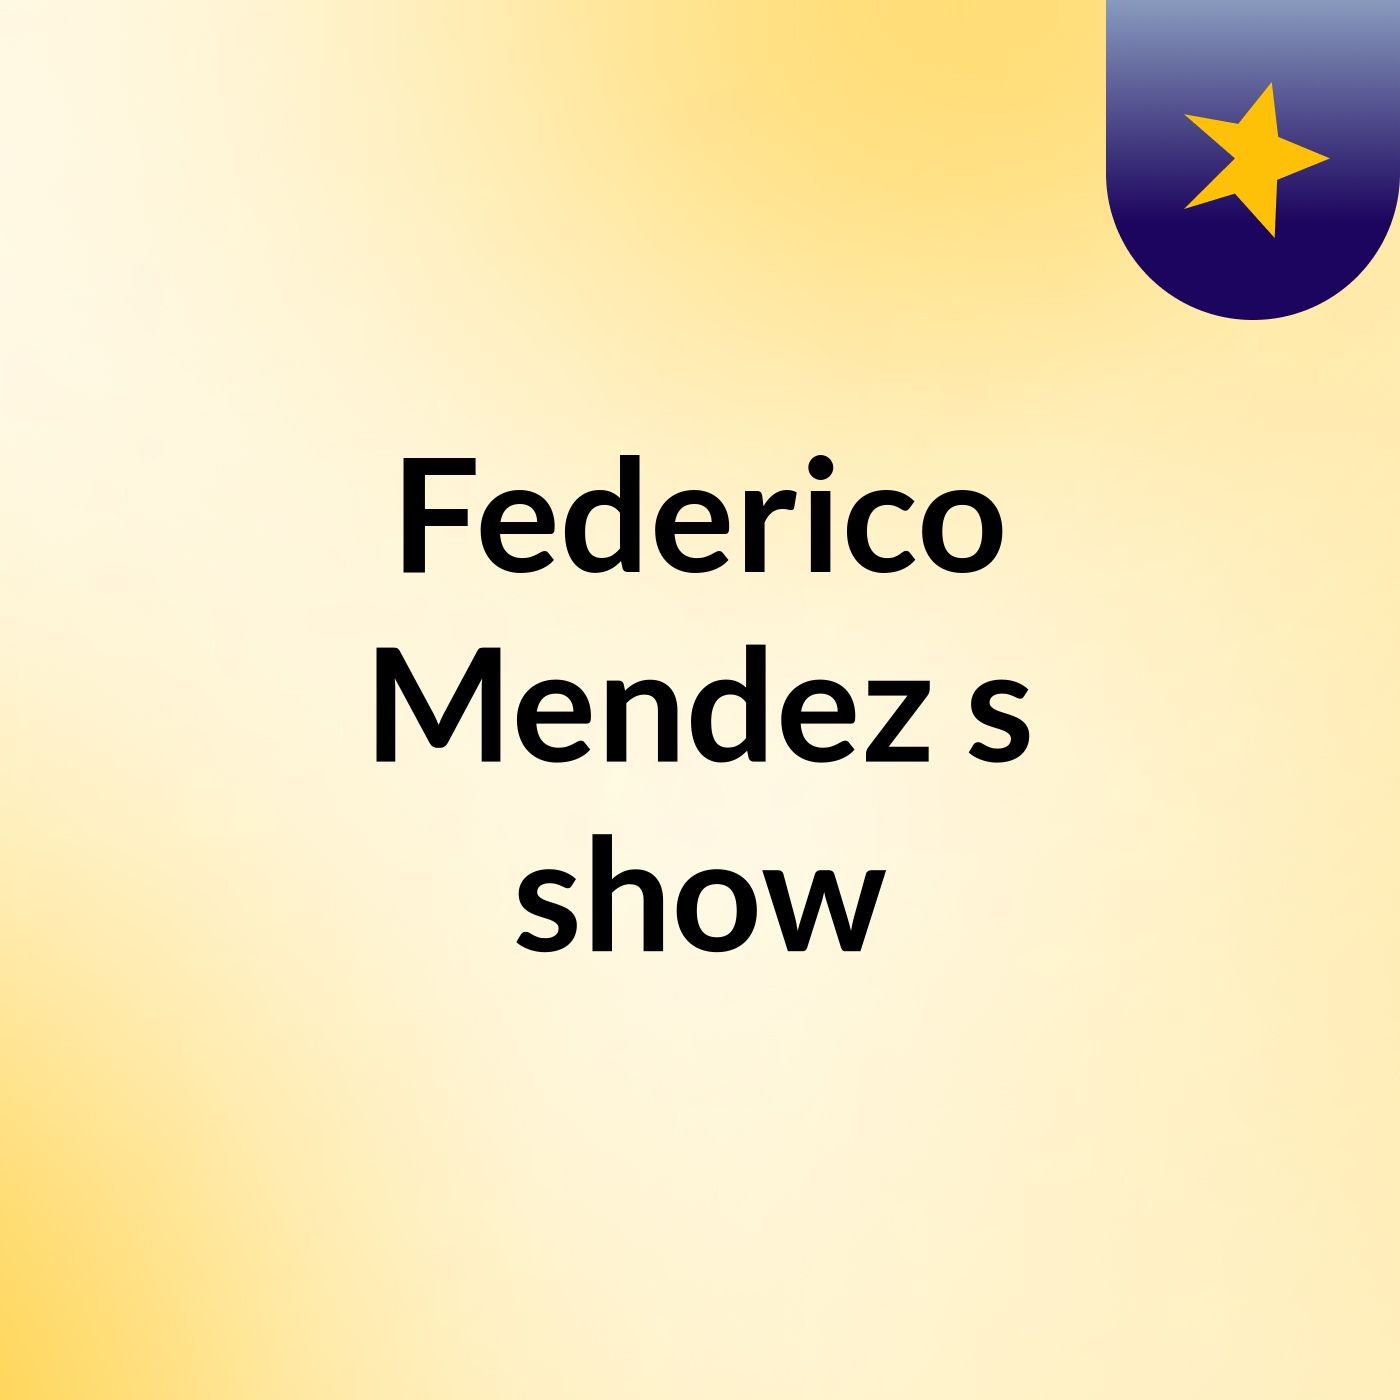 Federico Mendez's show